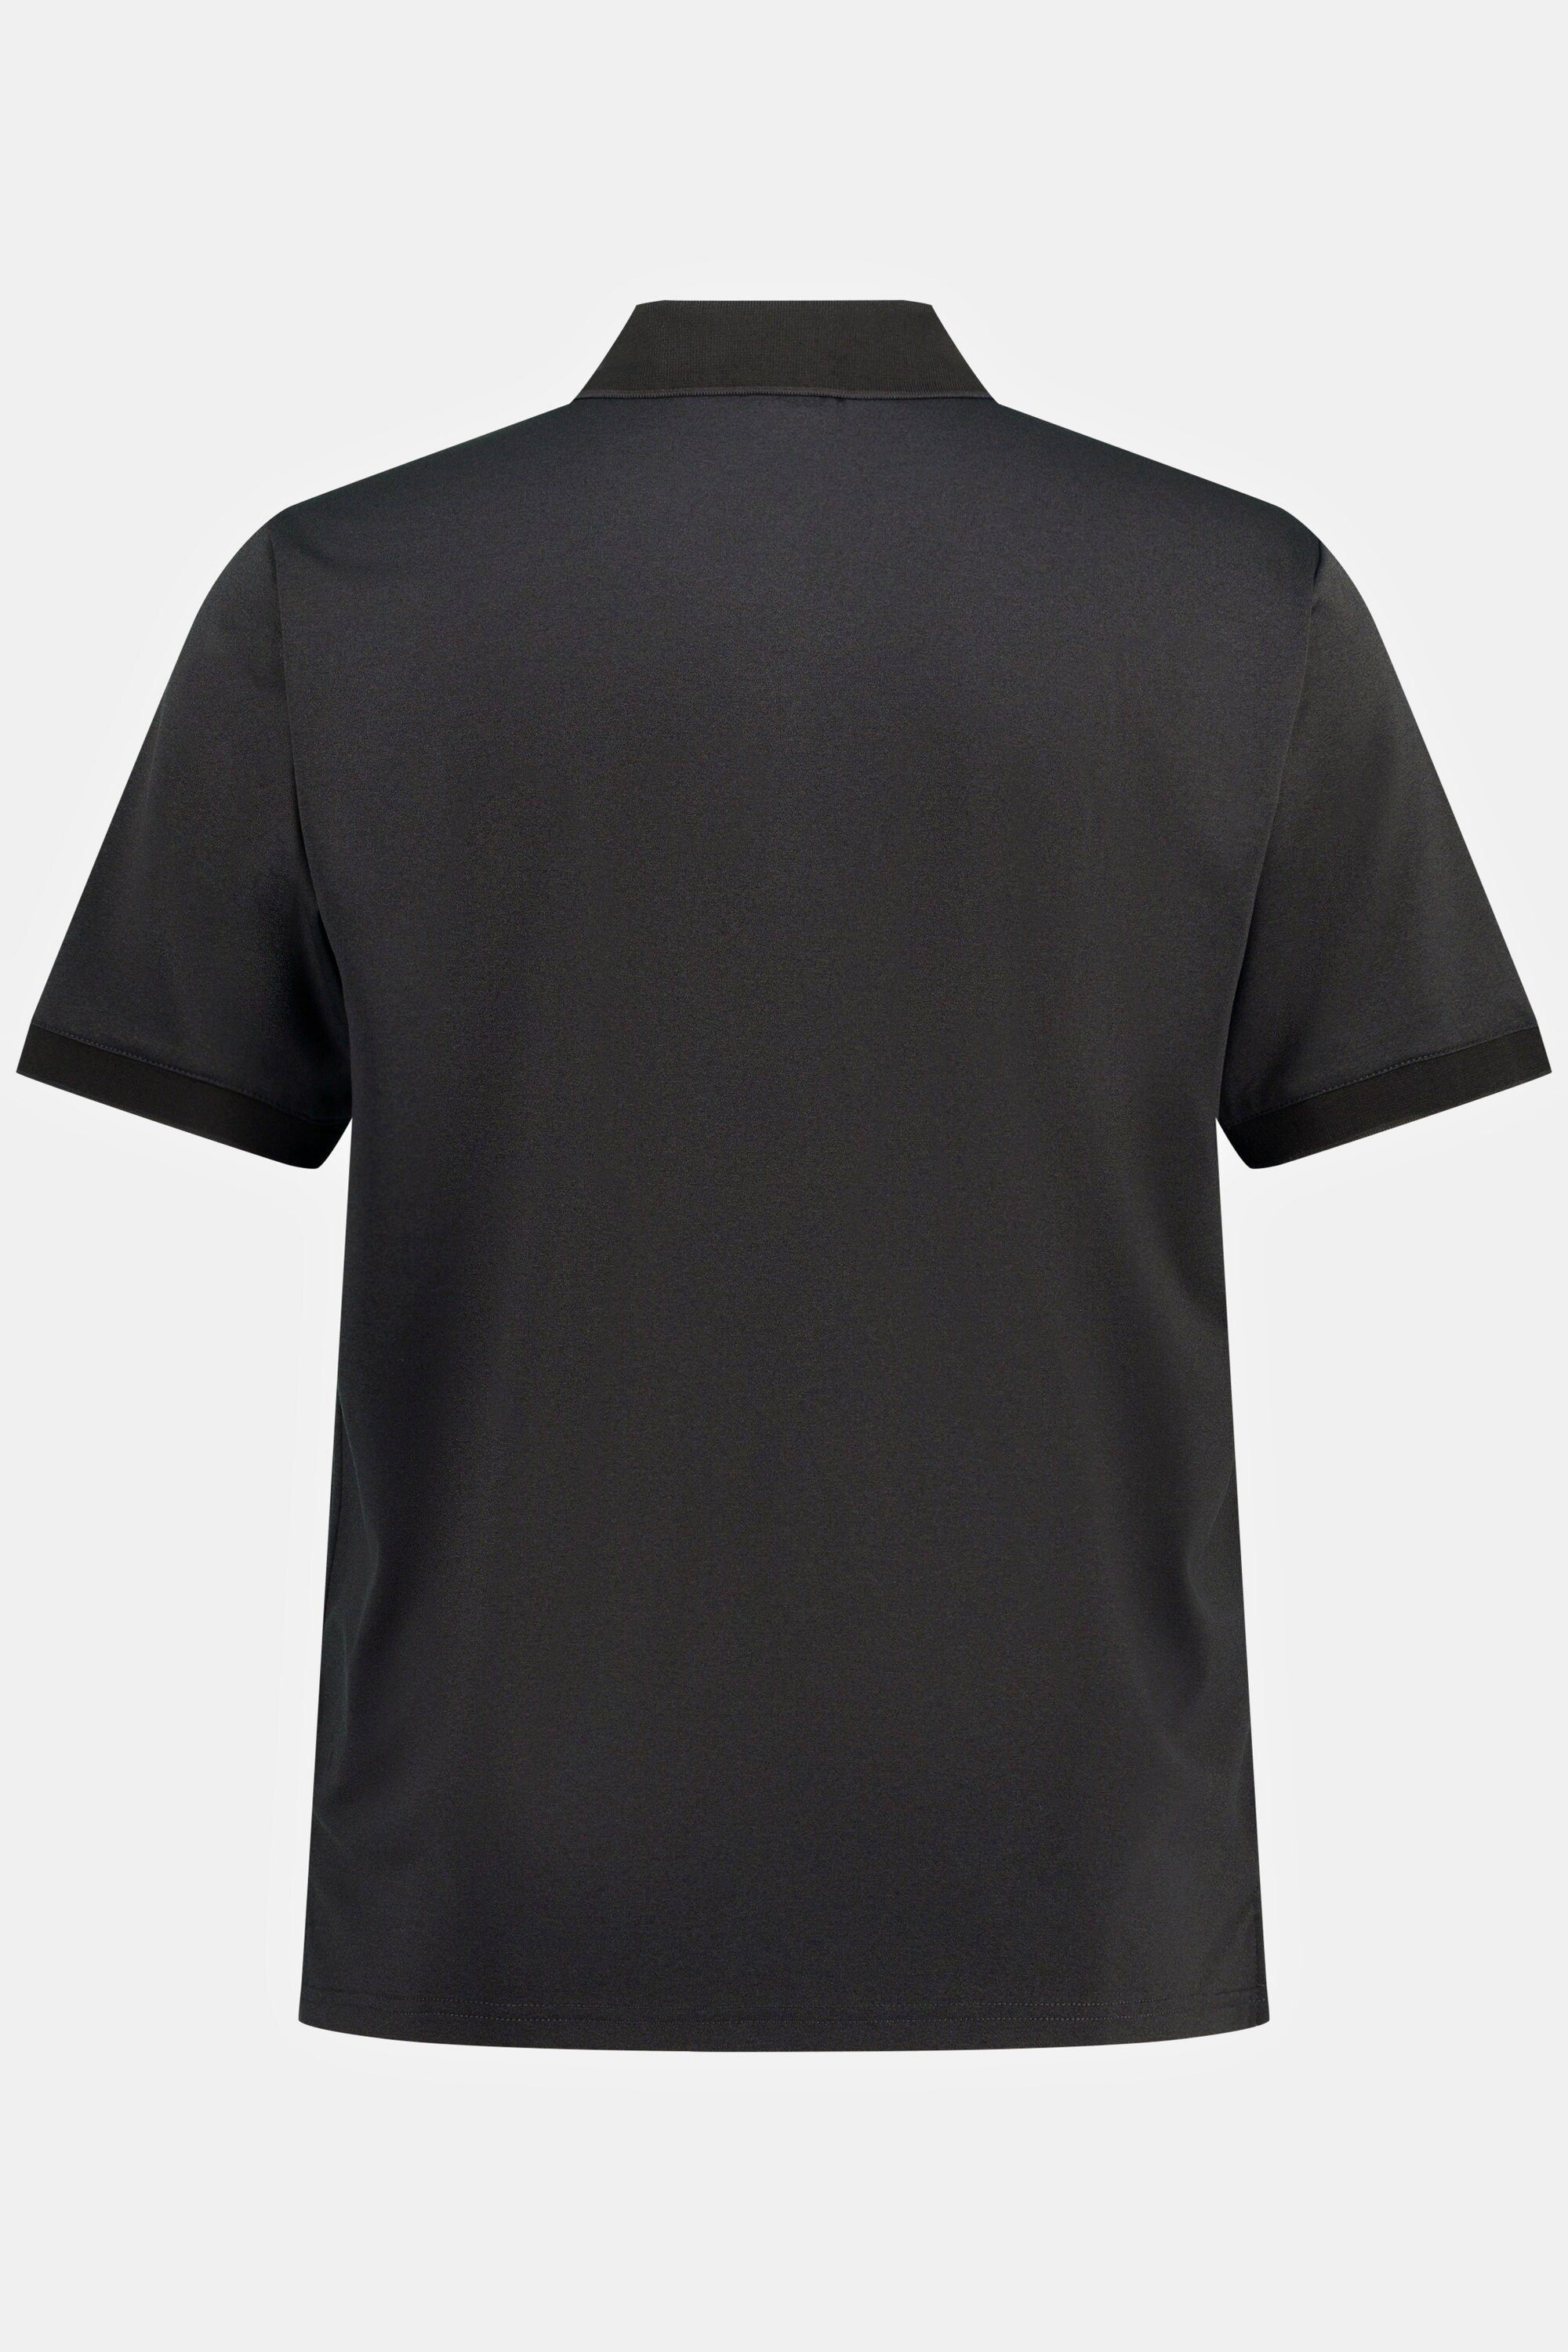 JP1880 Poloshirt Golf QuickDry Poloshirt schwarz Halbarm